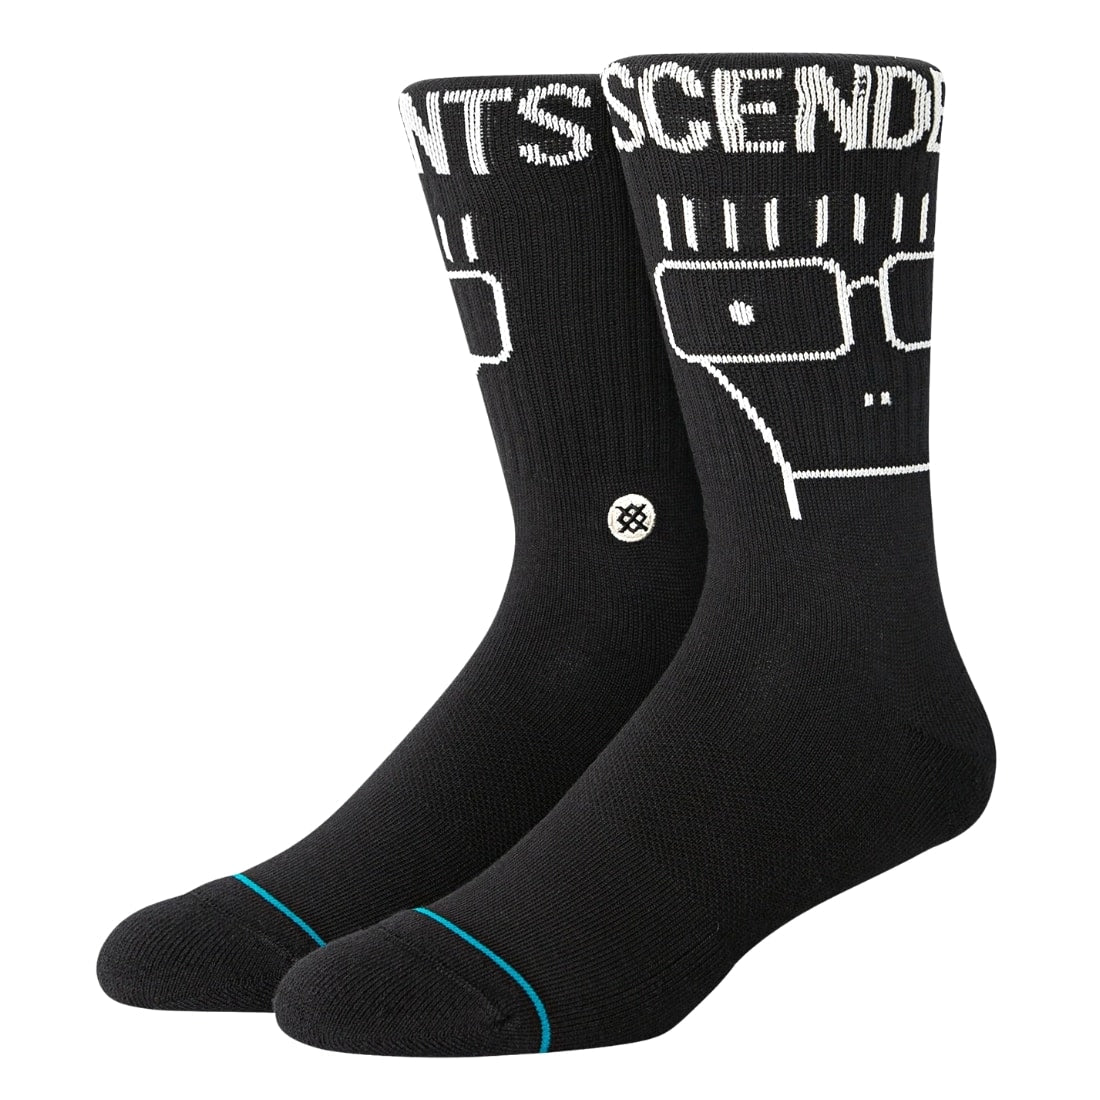 Stance Descendents Crew Socks - Washed Black - Unisex Crew Length Socks by Stance